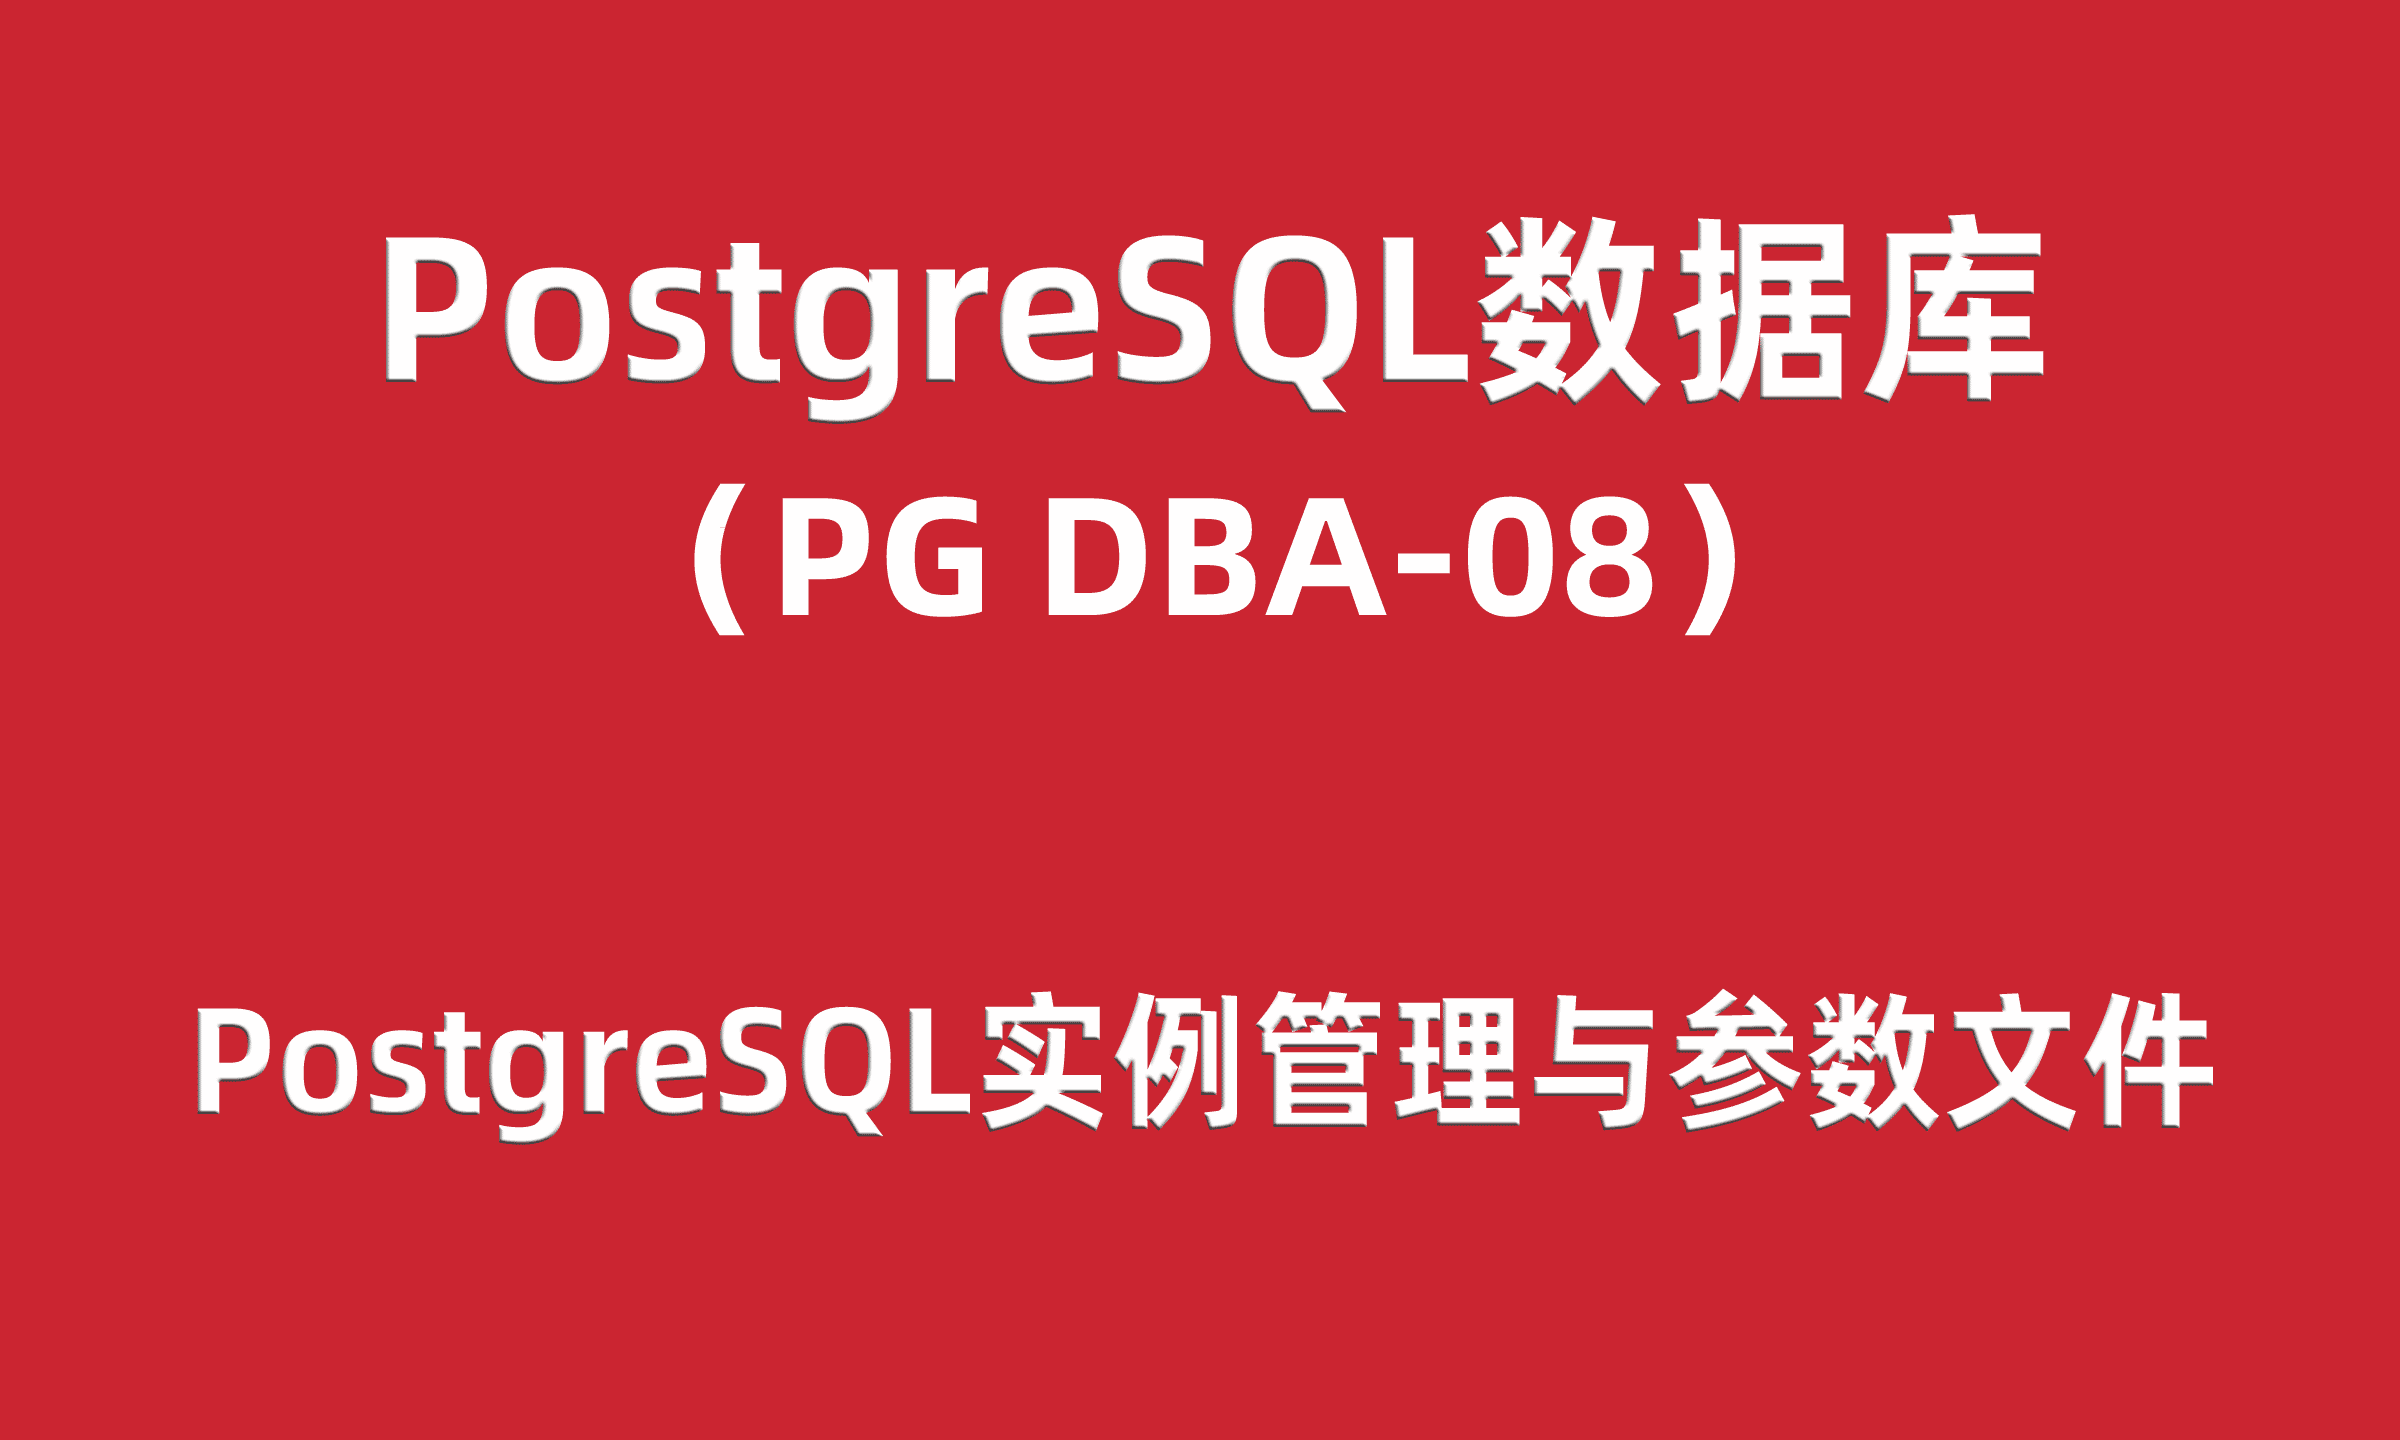  PG-DBA training 08: PostgreSQL instance management and parameter files